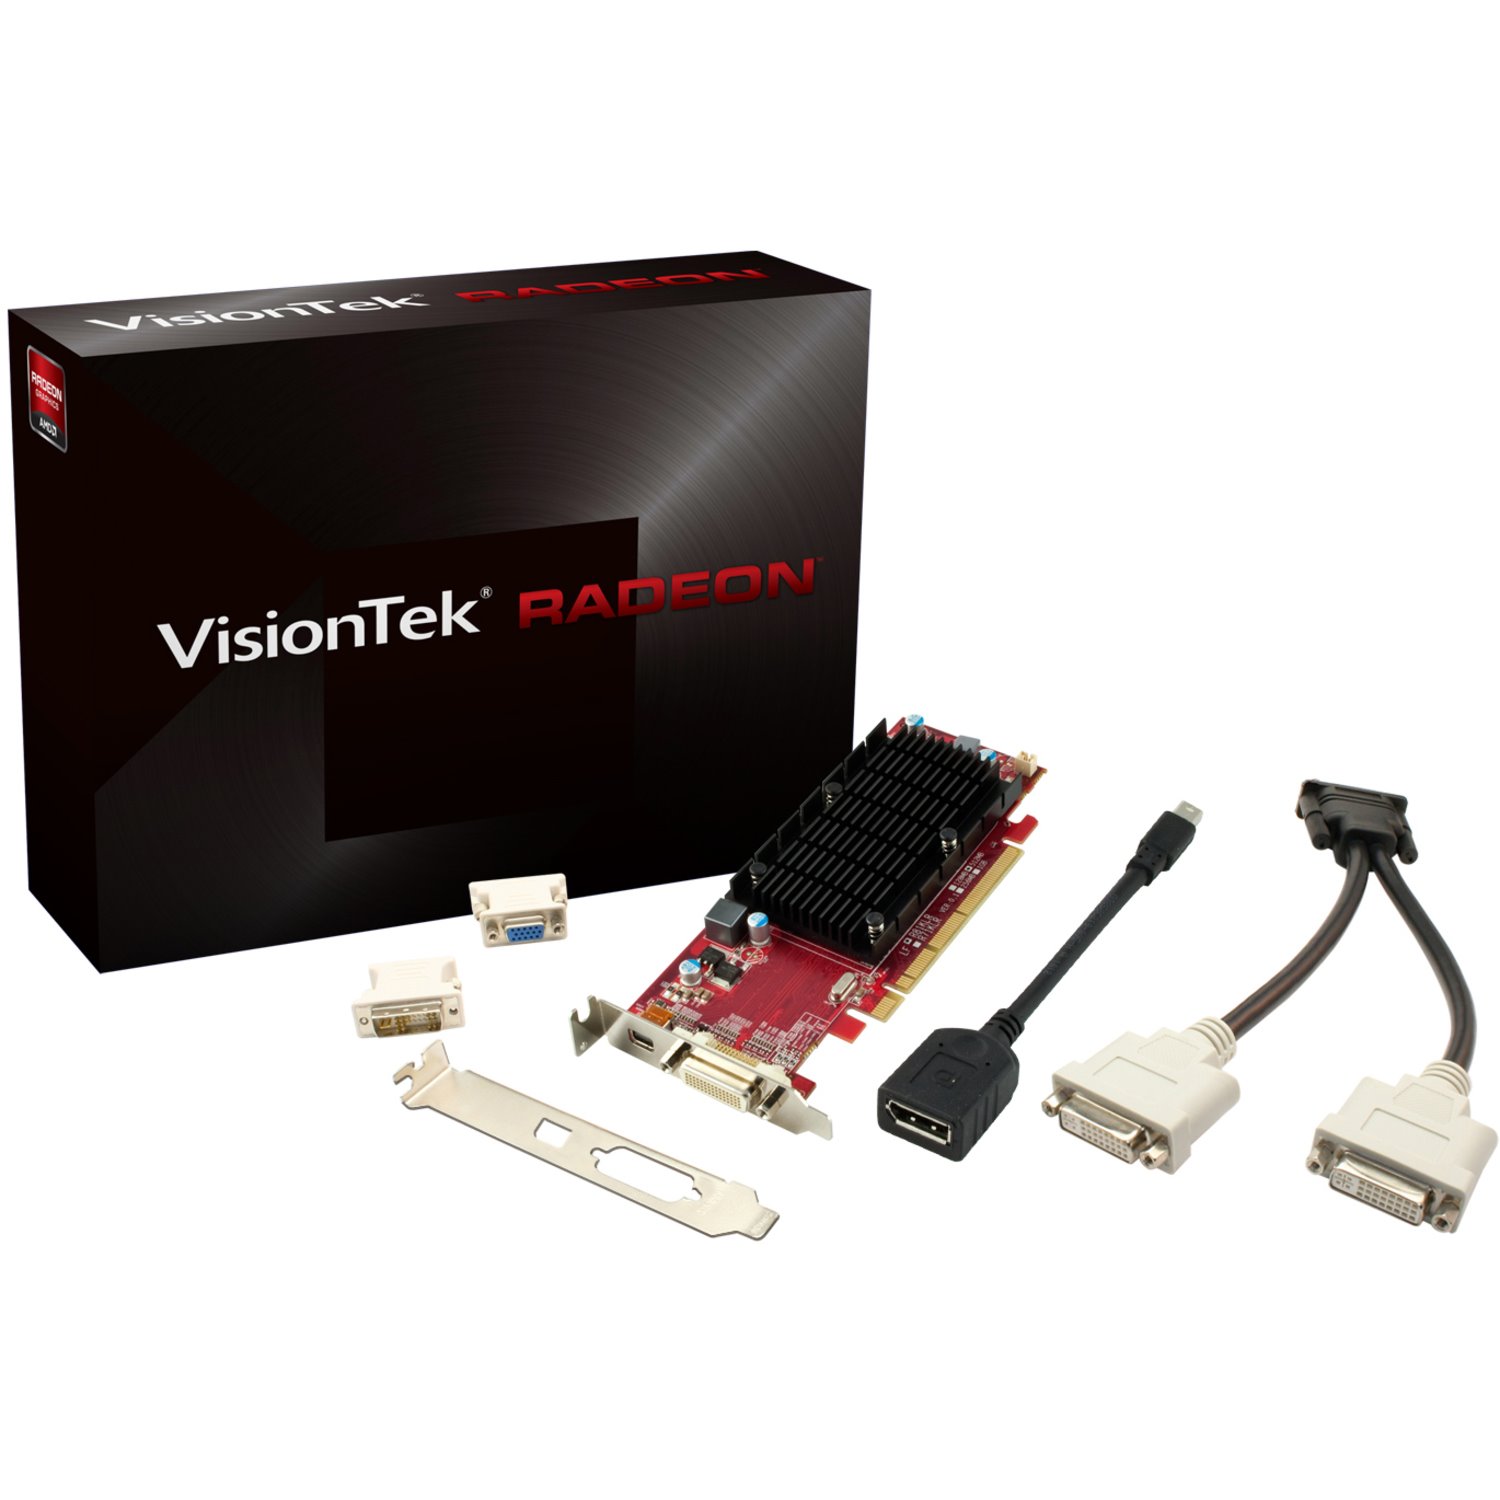 VisionTek Radeon 6350 SFF 1GB DDR3 3M DMS59 (2x DVI-I, miniDP) w/ 2x DVI-I to VGA Adapter